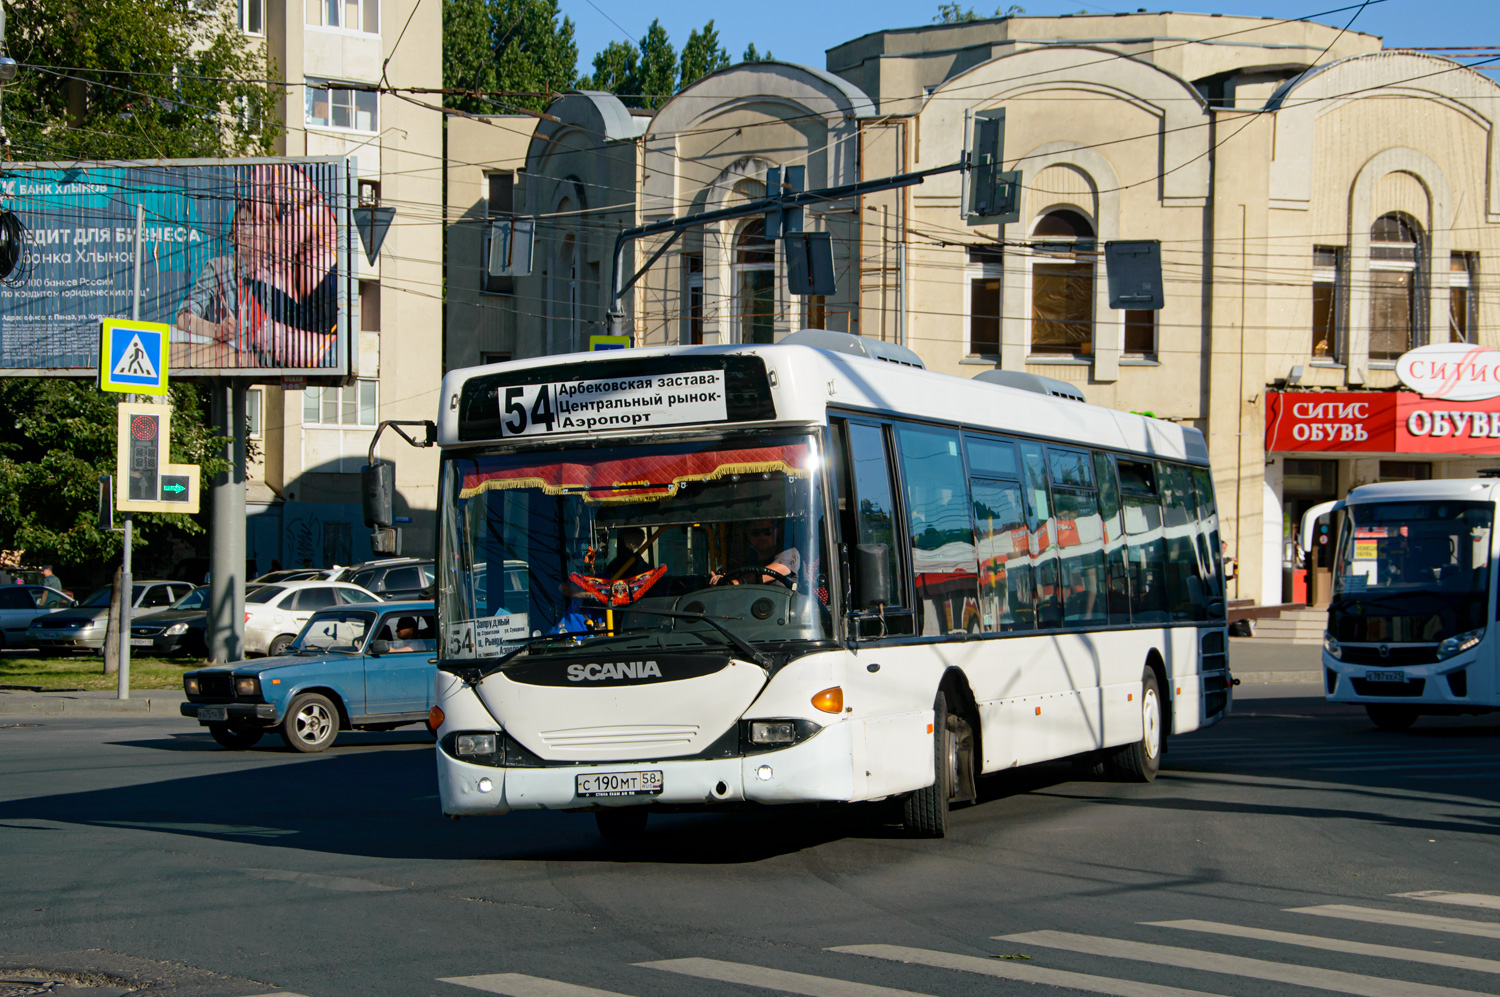 Penza region, Scania OmniLink I (Scania-St.Petersburg) Nr. С 190 МТ 58; Penza region, PAZ-320435-04 "Vector Next" Nr. Е 787 ХХ 21